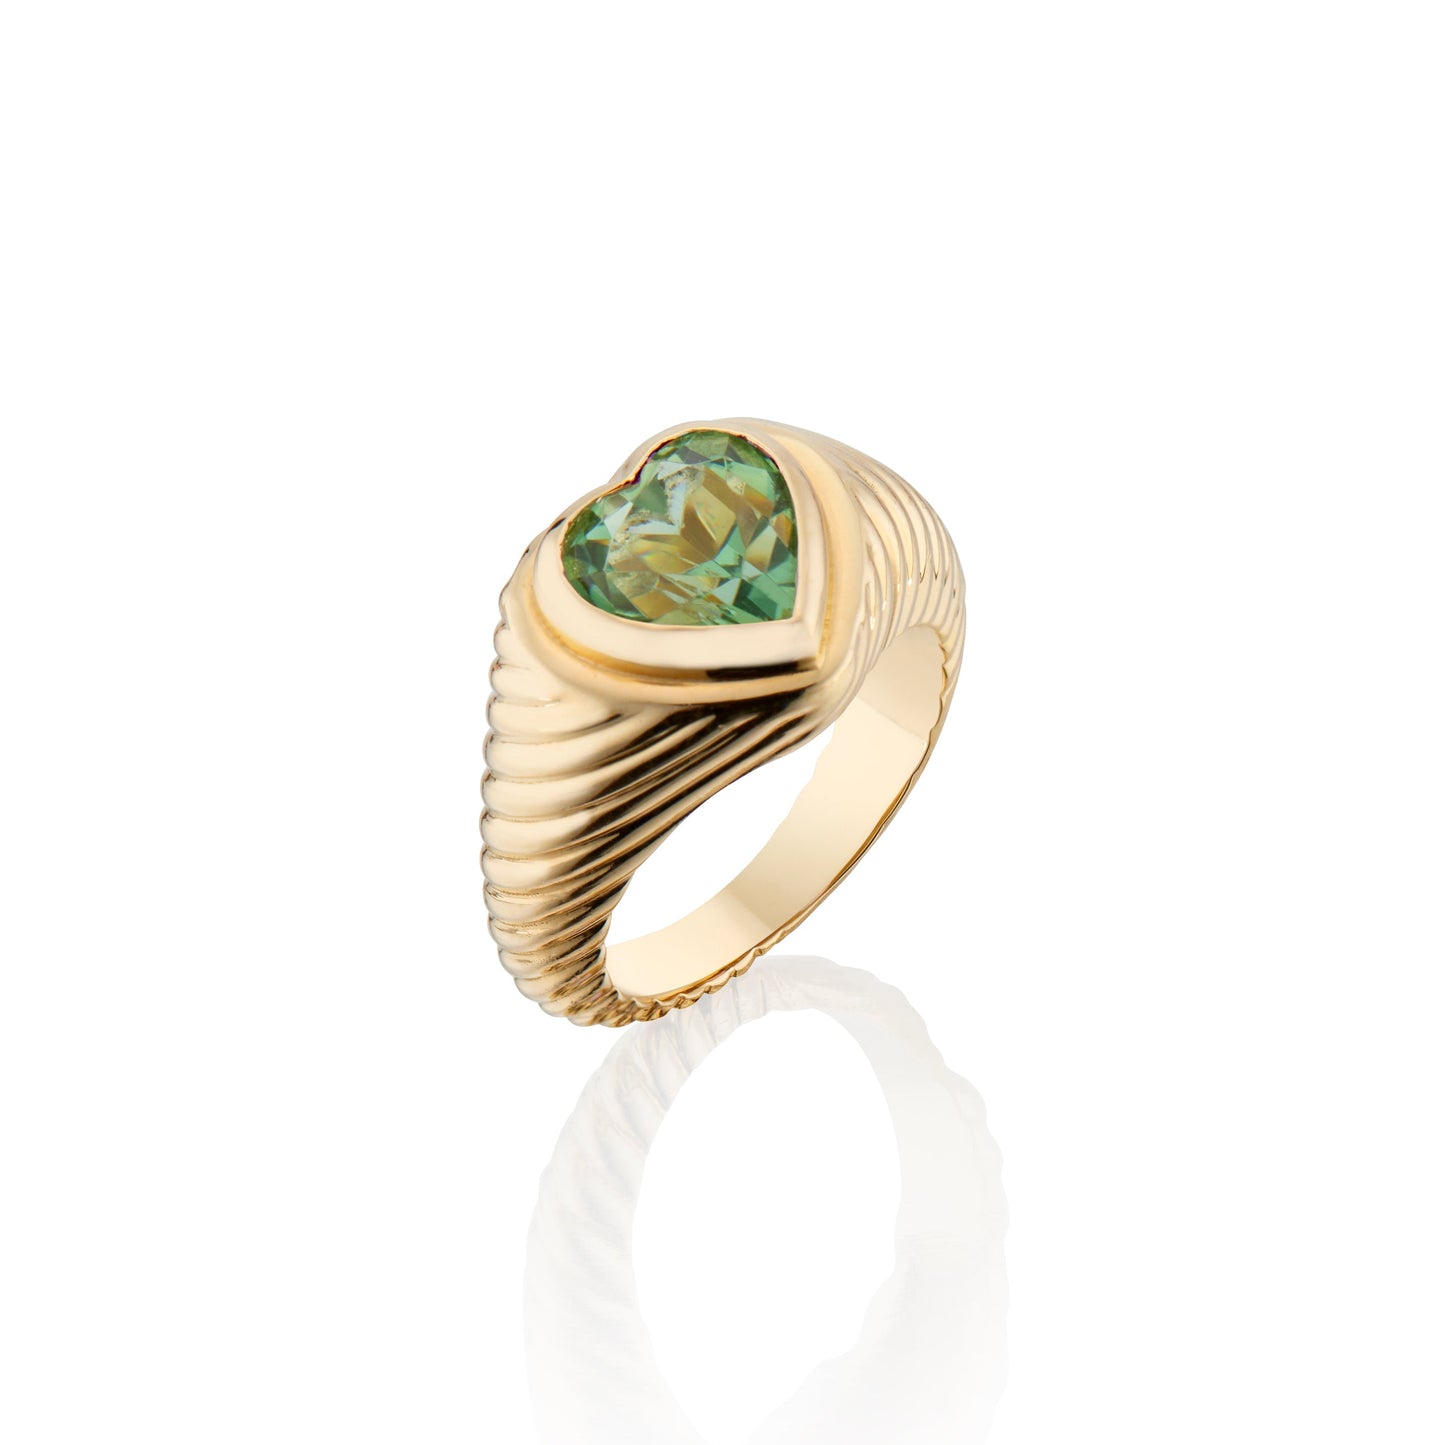 Eden Love Signet Pinky Ring with Green Tourmaline Gemstone